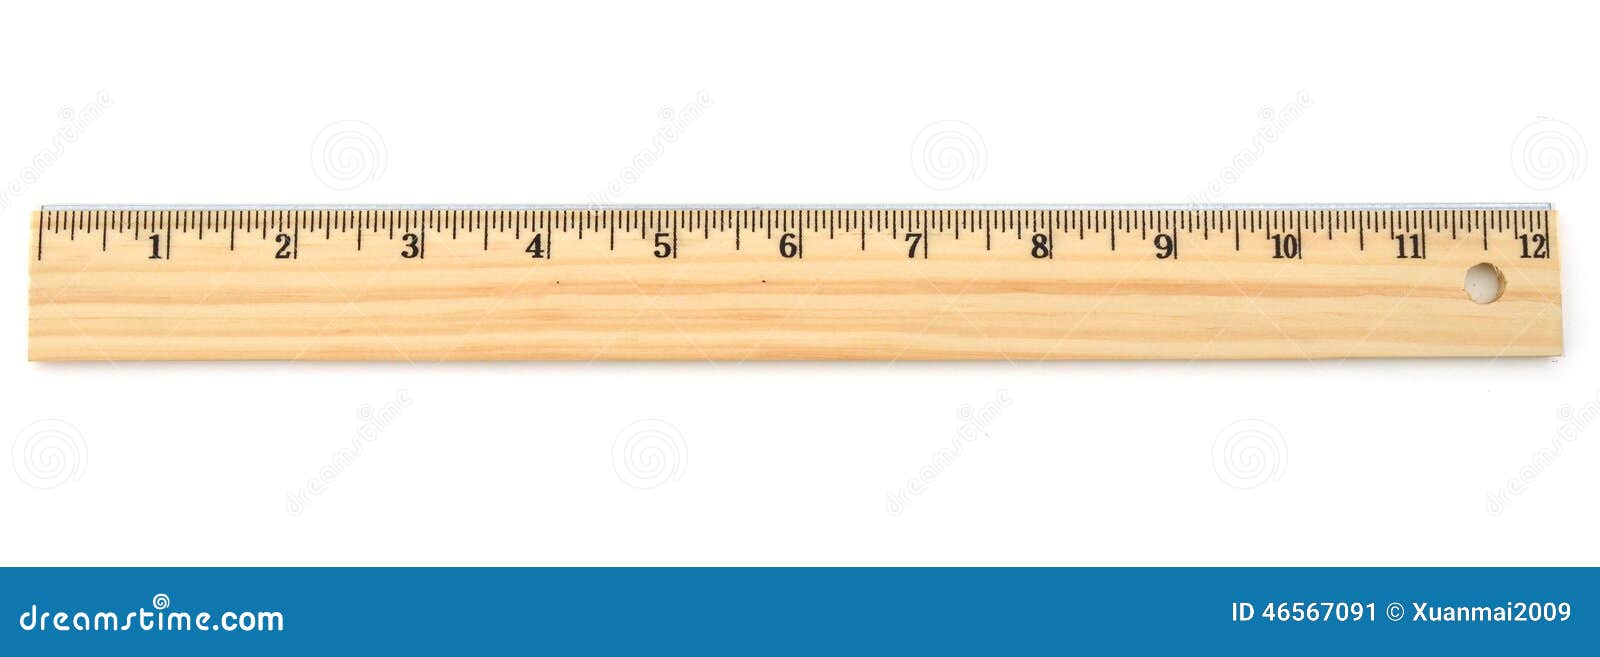 12 inch ruler standard